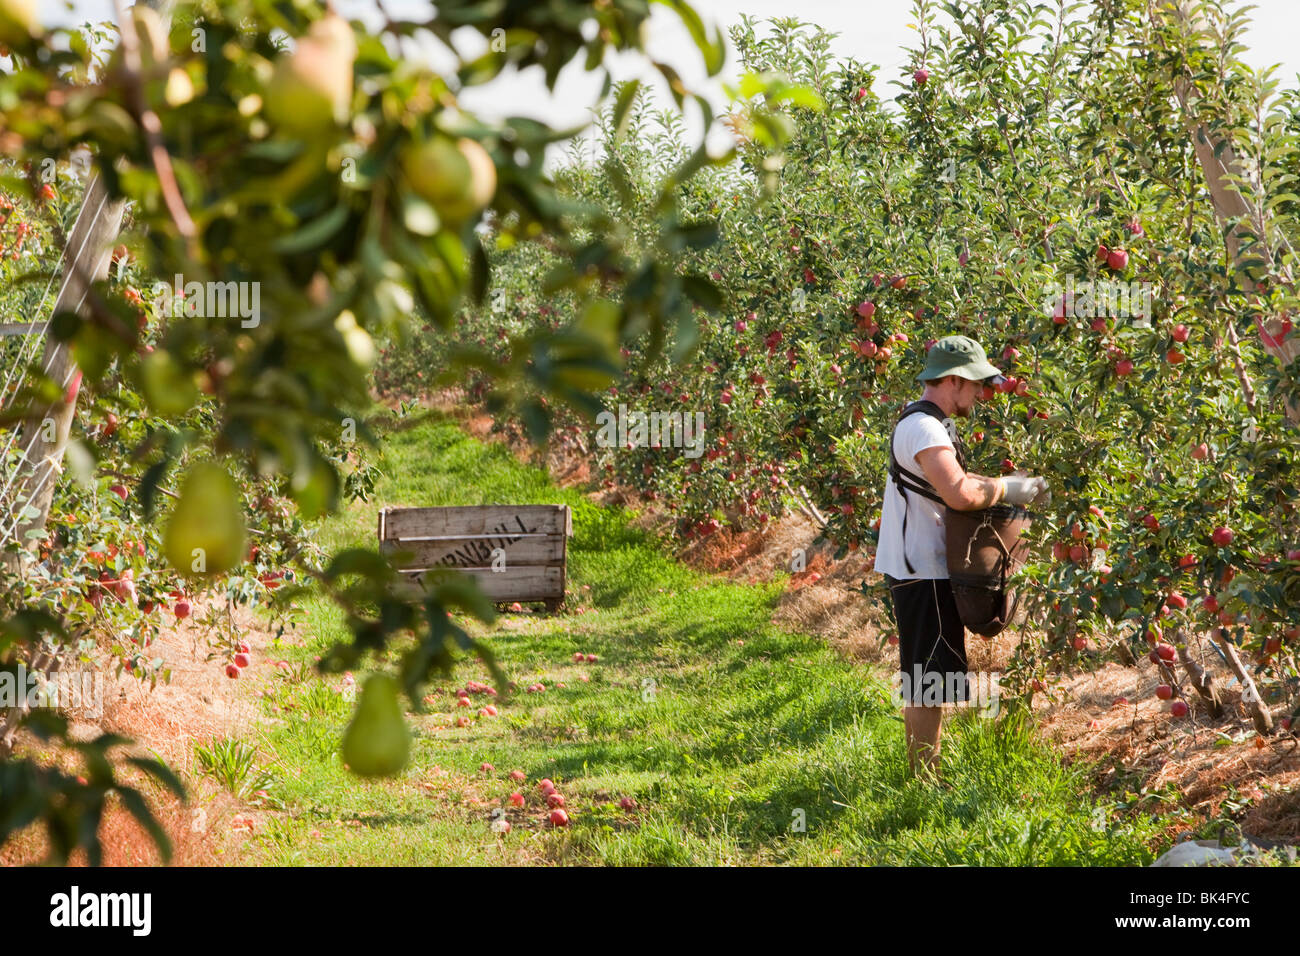 https://c8.alamy.com/comp/BK4FYC/an-apple-orchard-near-shepperton-victoria-australia-BK4FYC.jpg